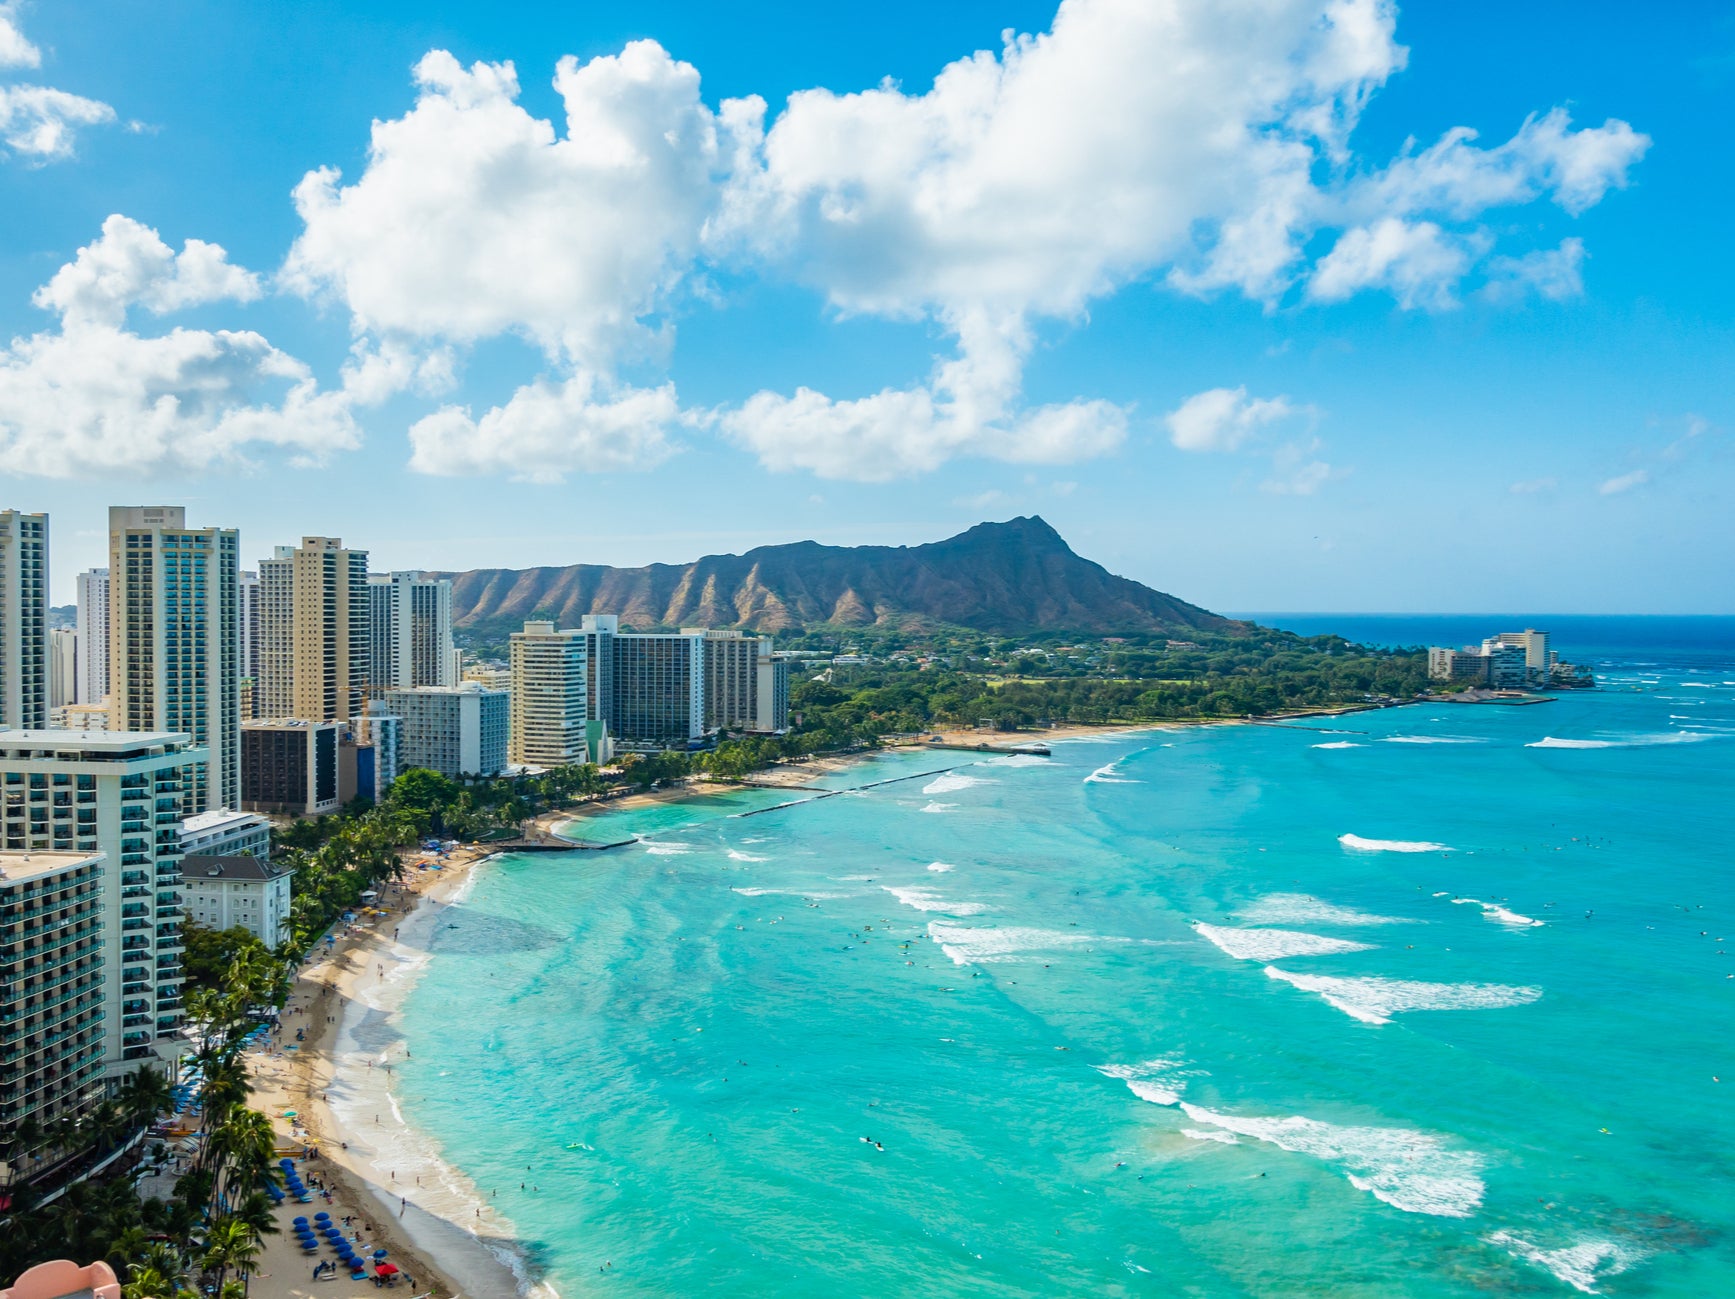 Honolulu is home to the majority of Hawaii’s cosmopolitan population